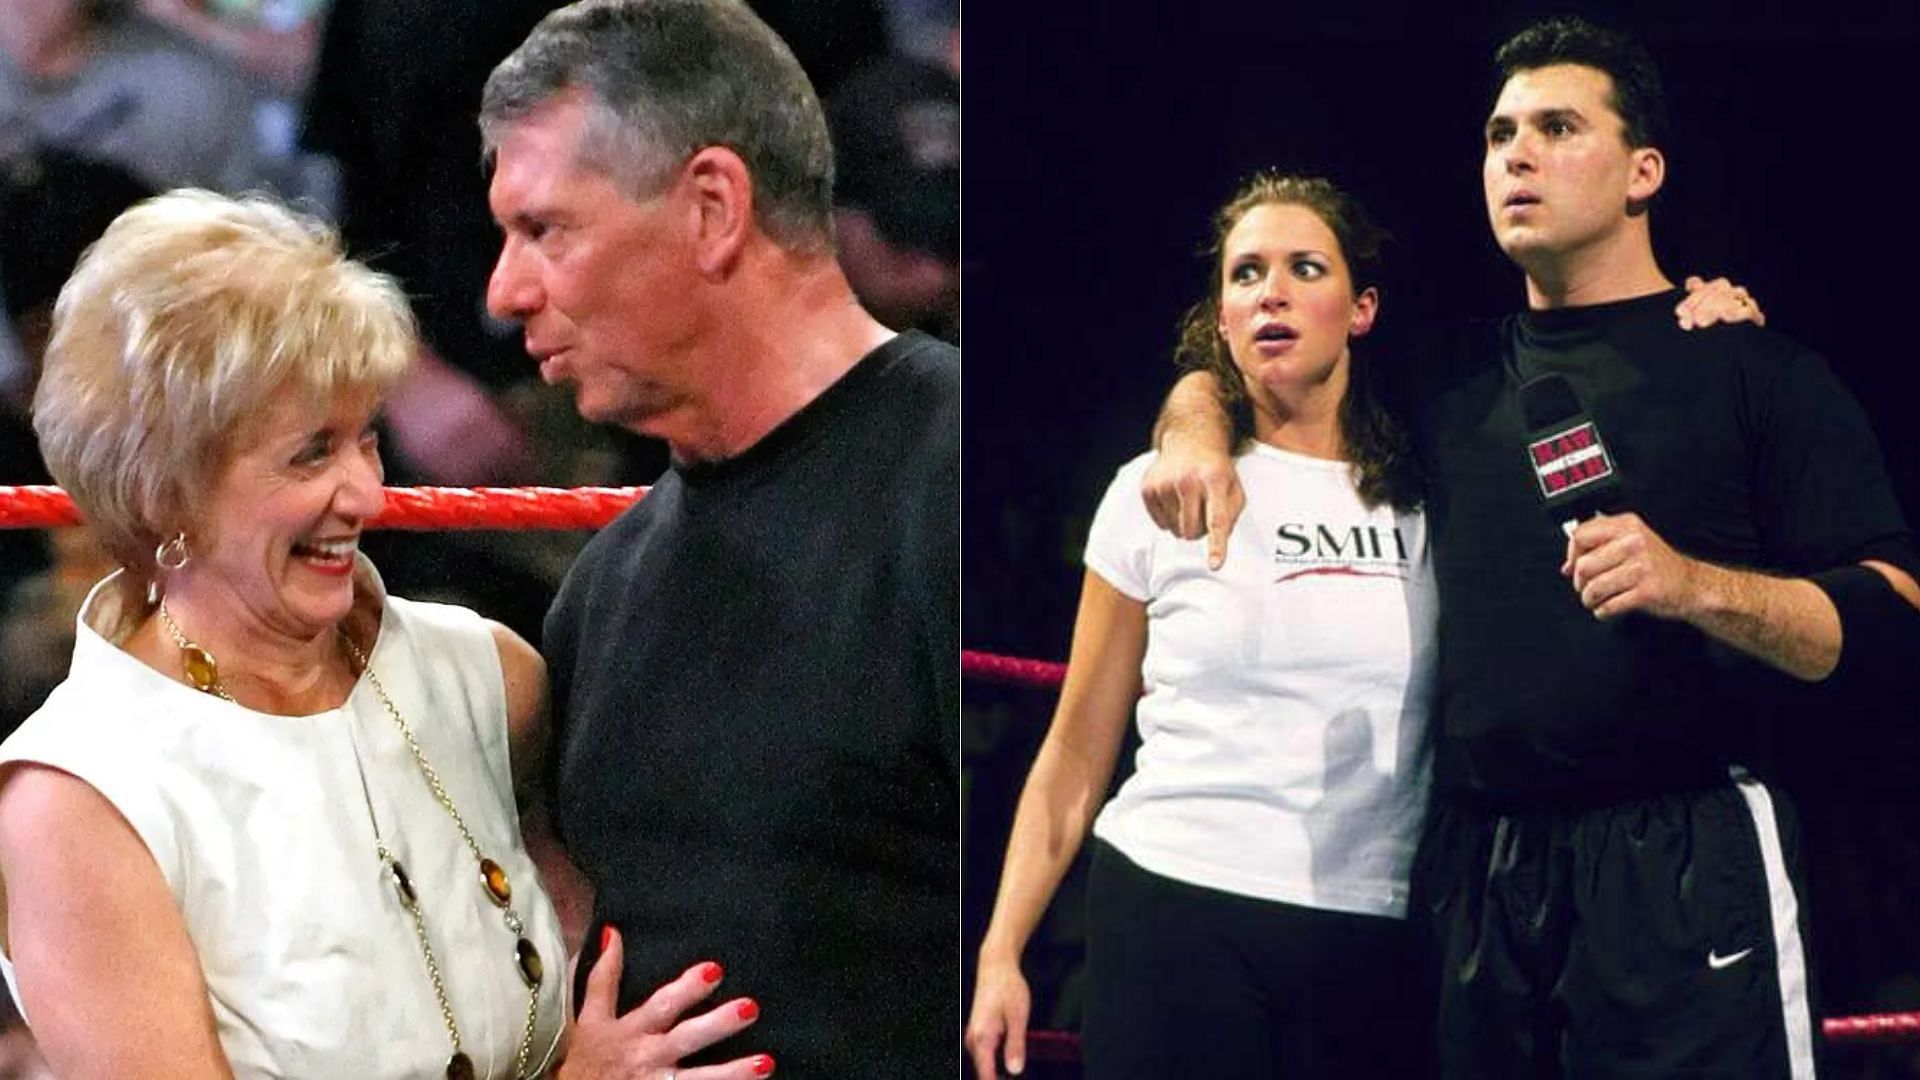 Left to right: Linda McMahon, Vince McMahon, Stephanie McMahon, and Shane McMahon